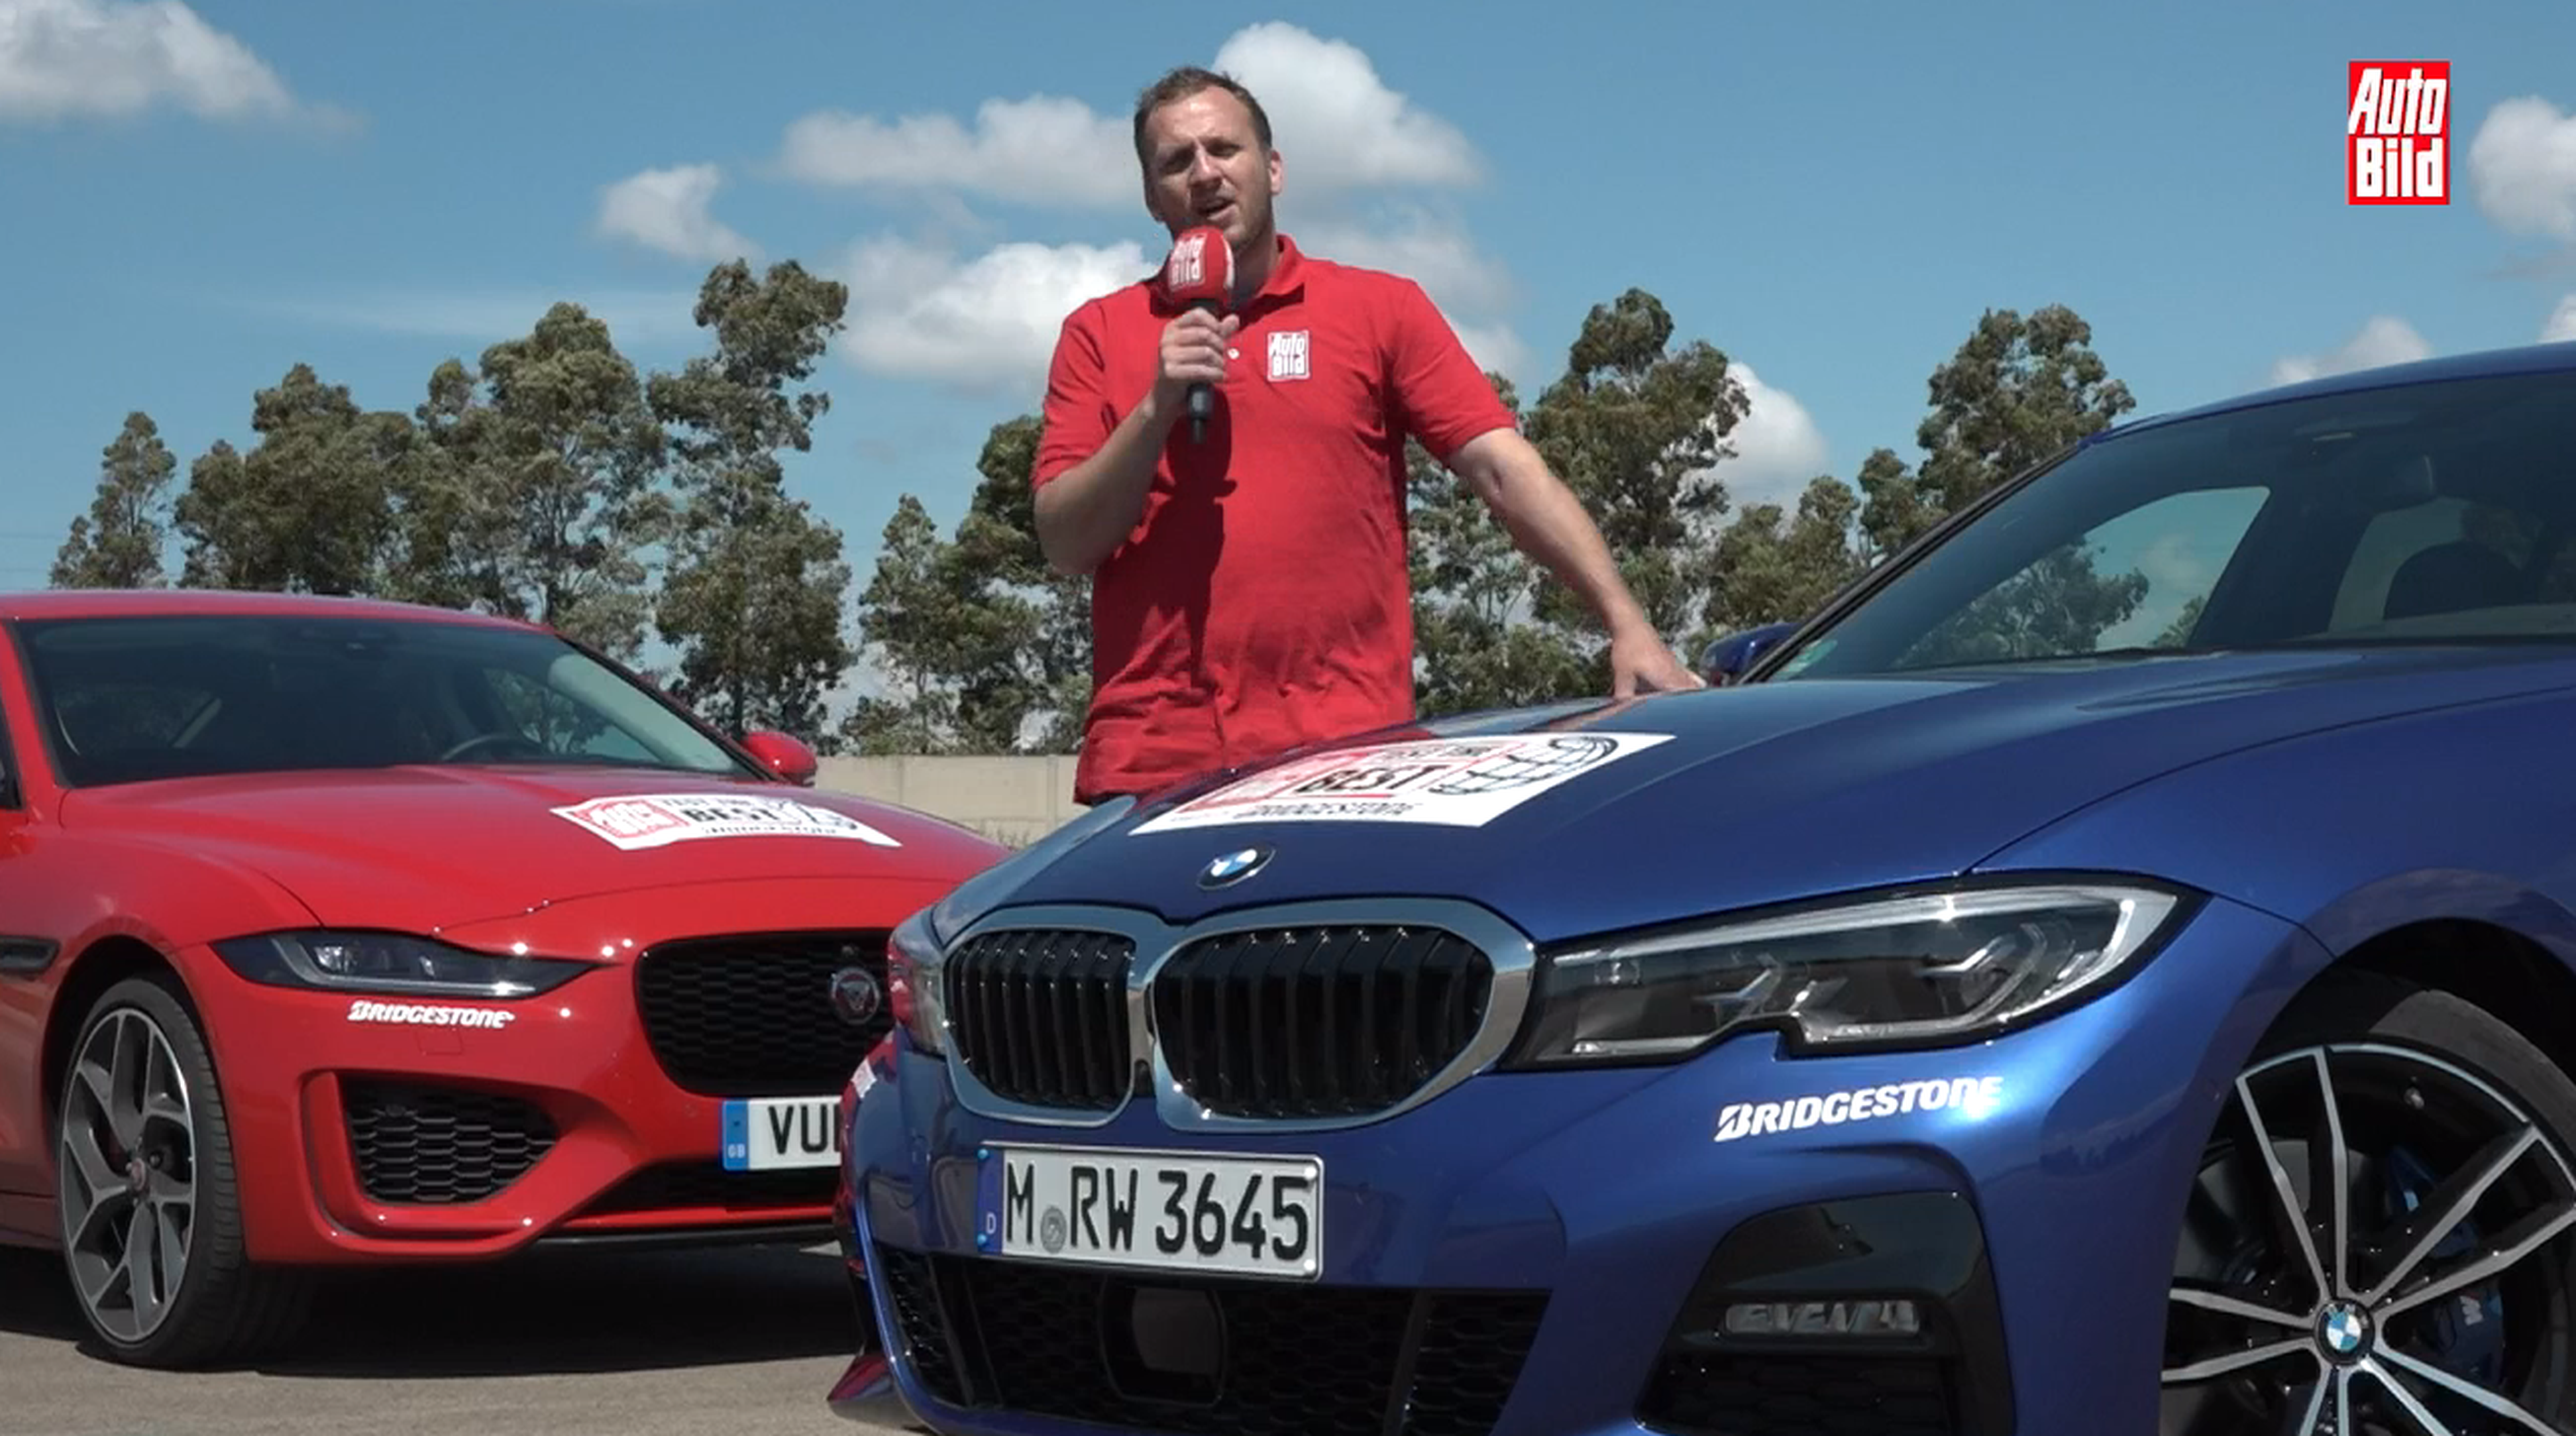 VÍDEO: Comparativa entre BMW 330i y Jaguar XE, ¿cuál es mejor?